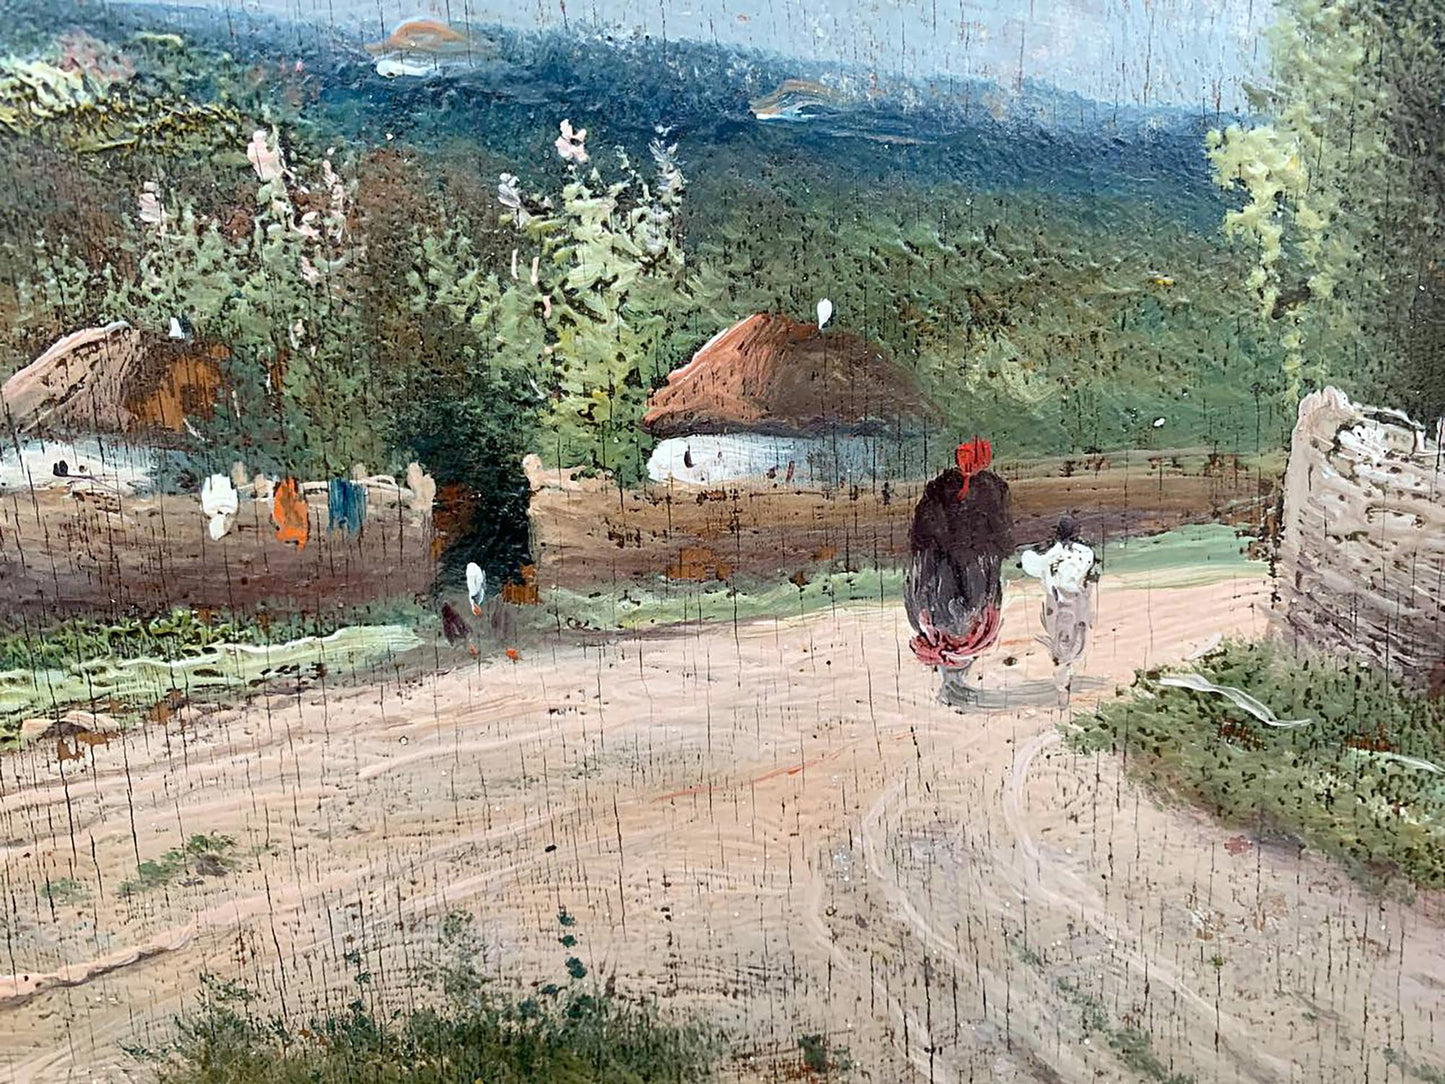 village painting art